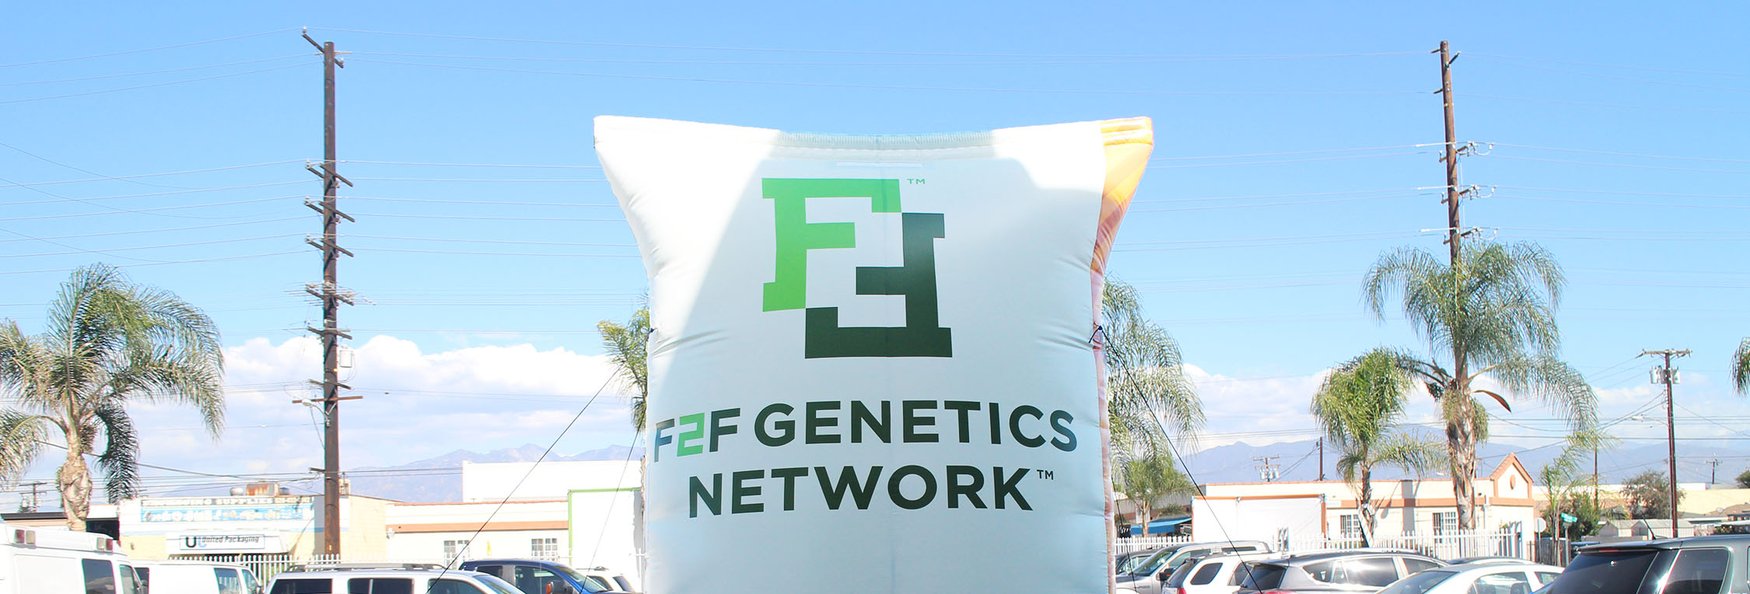 15-foot-corn-seed-bag-replica